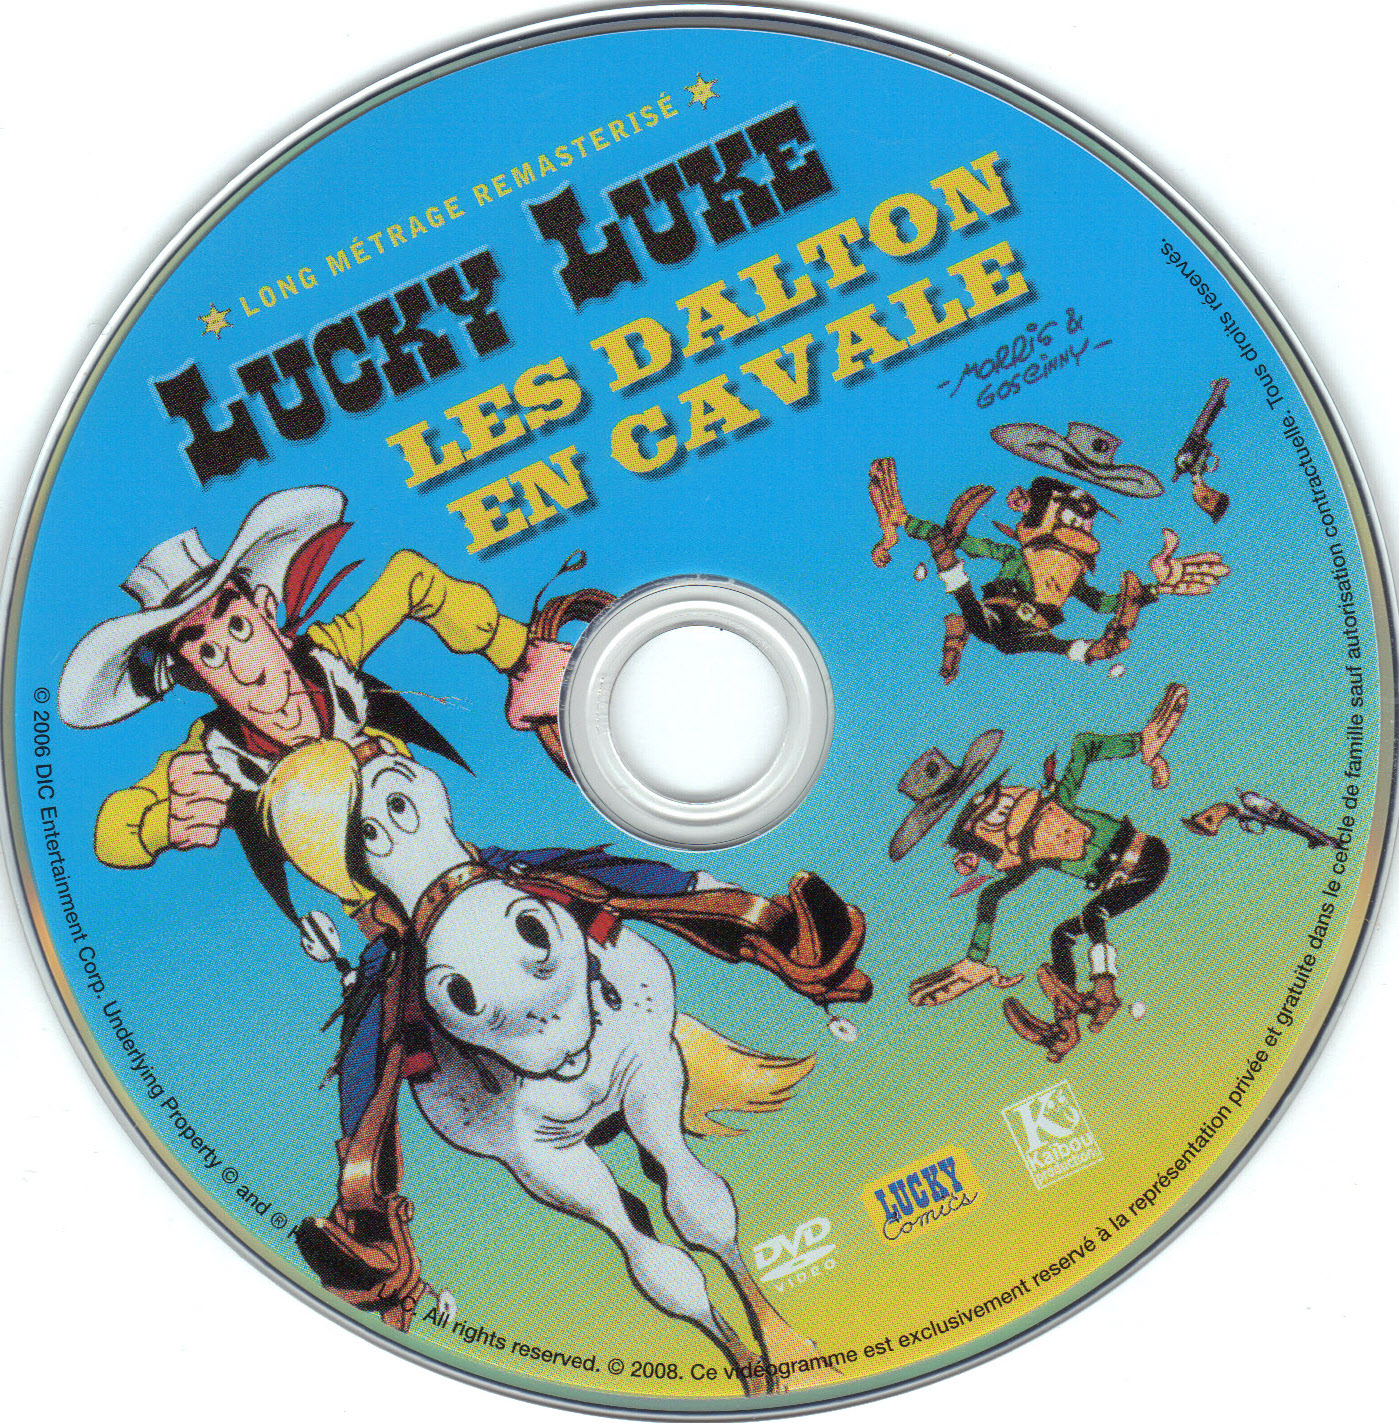 Lucky Luke - Les Dalton en Cavale